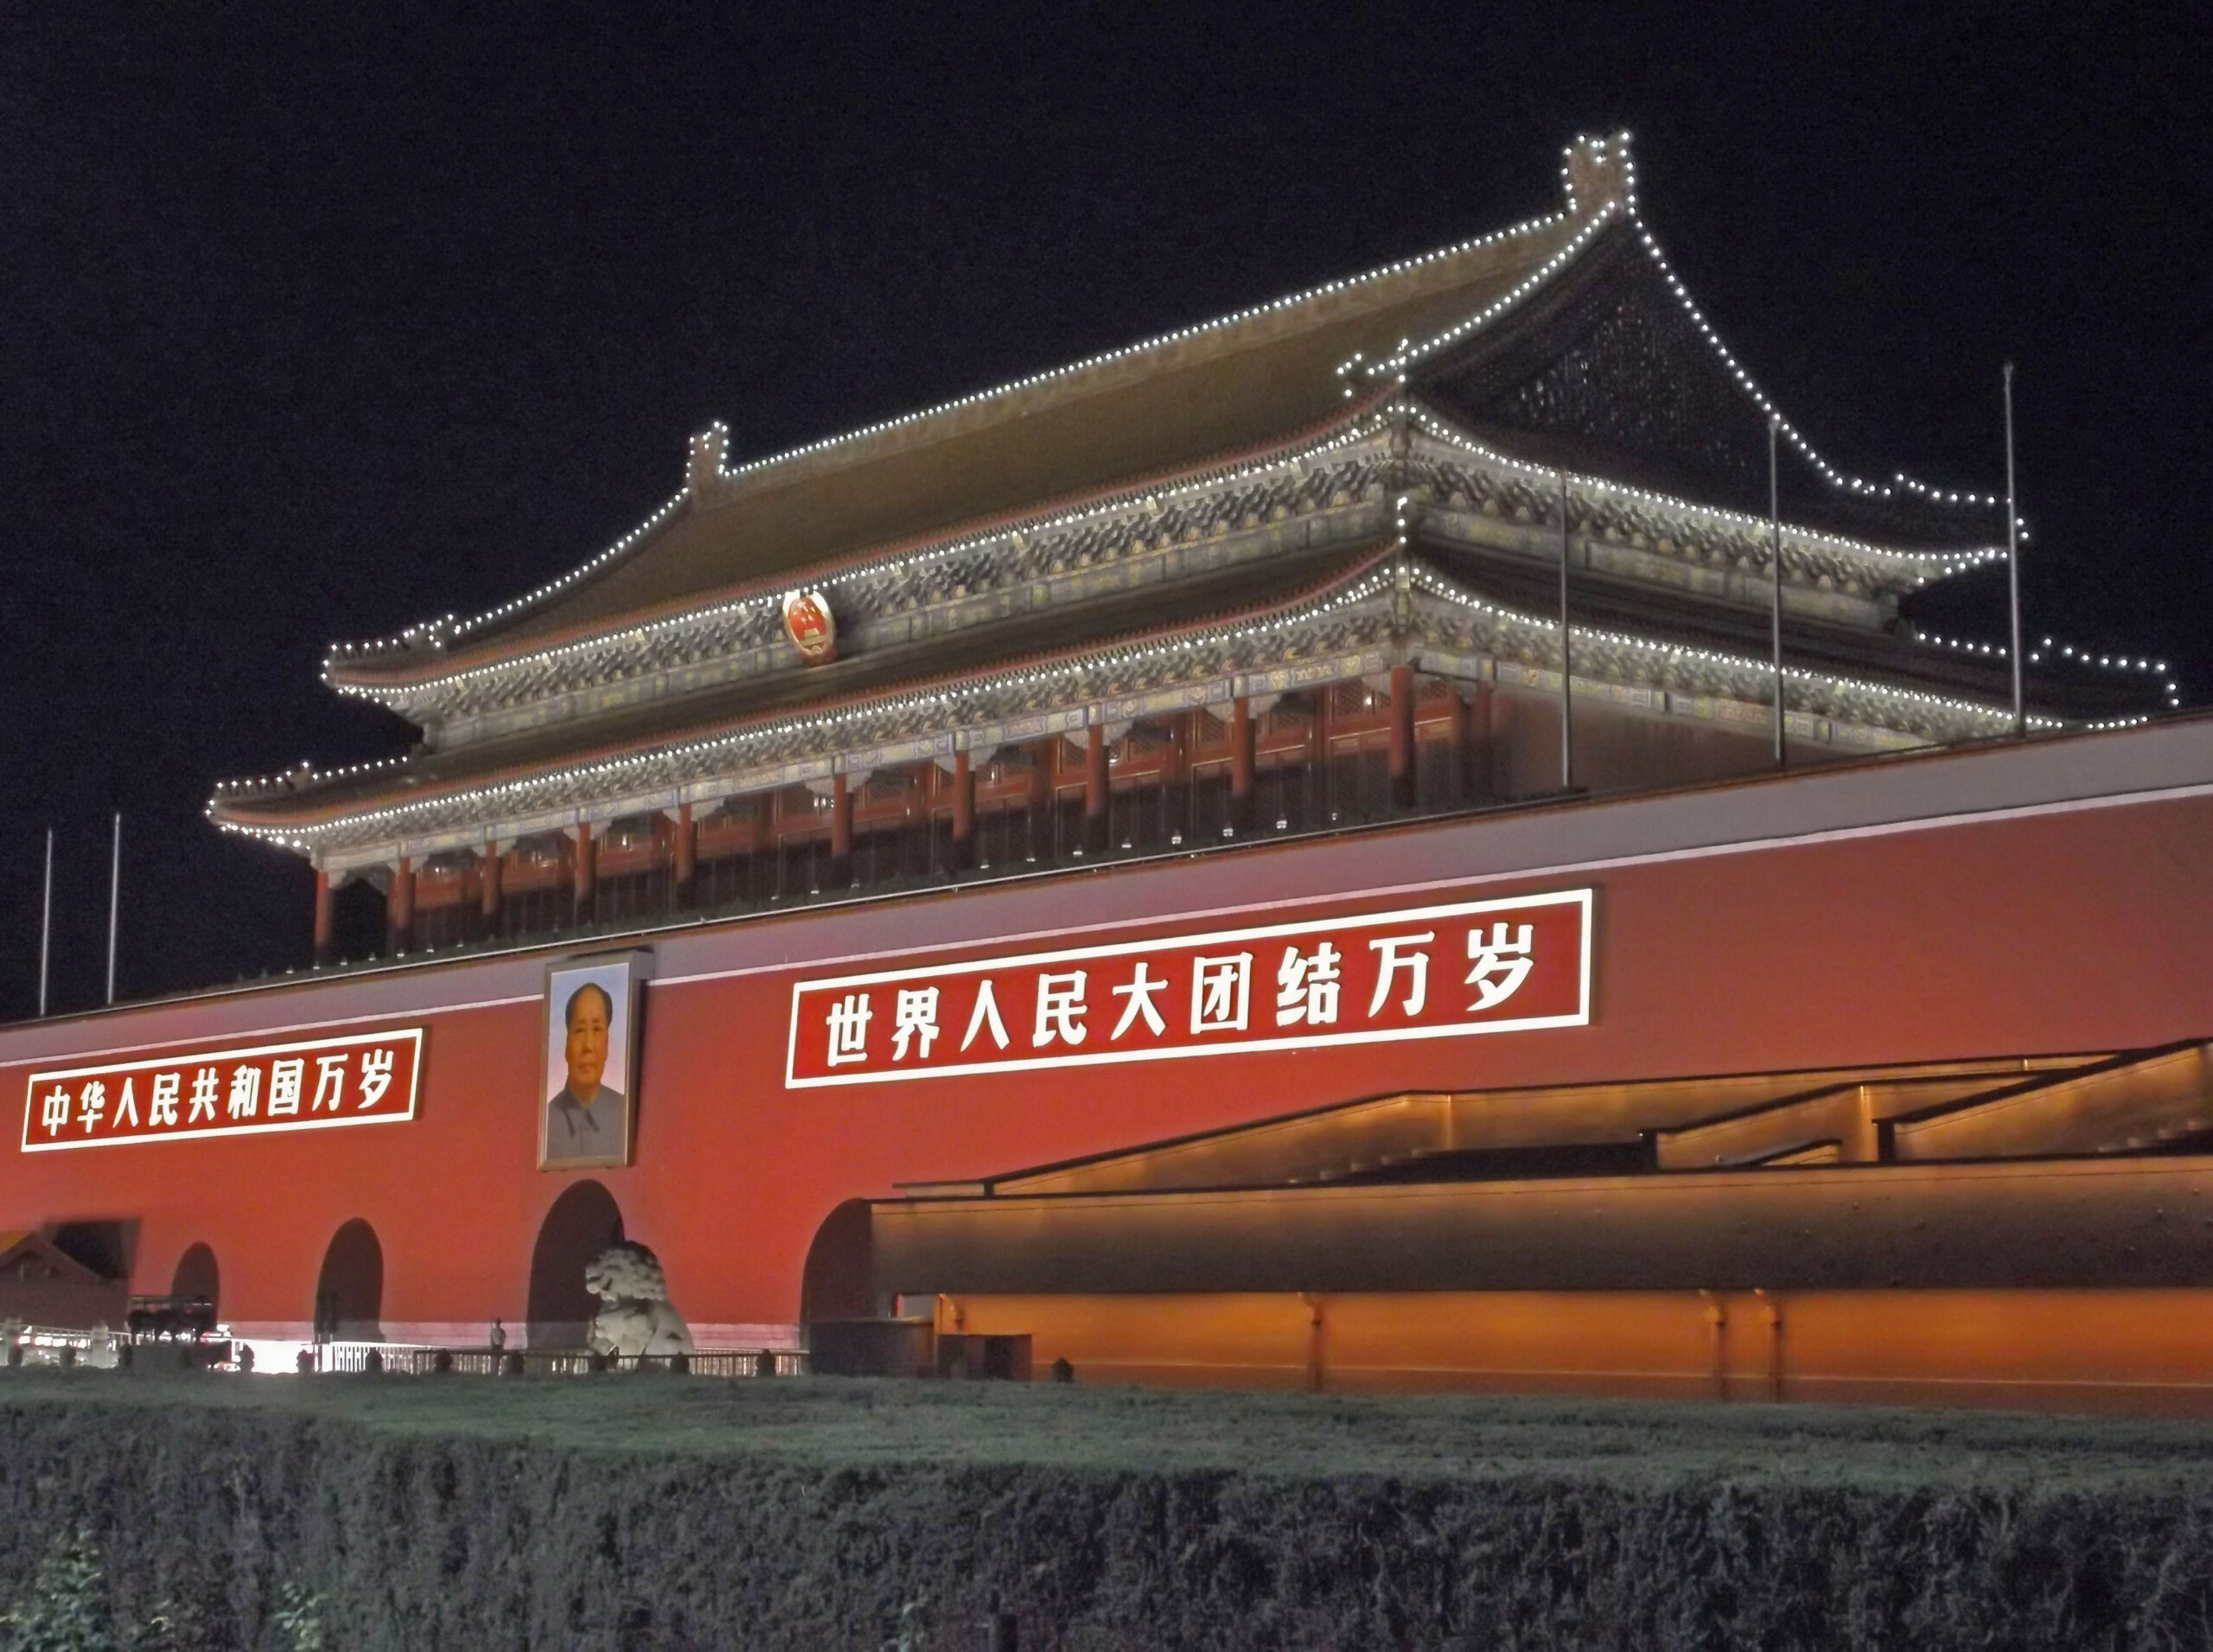 Tiananmen Square/Forbidden City Entrance, Beijing, China